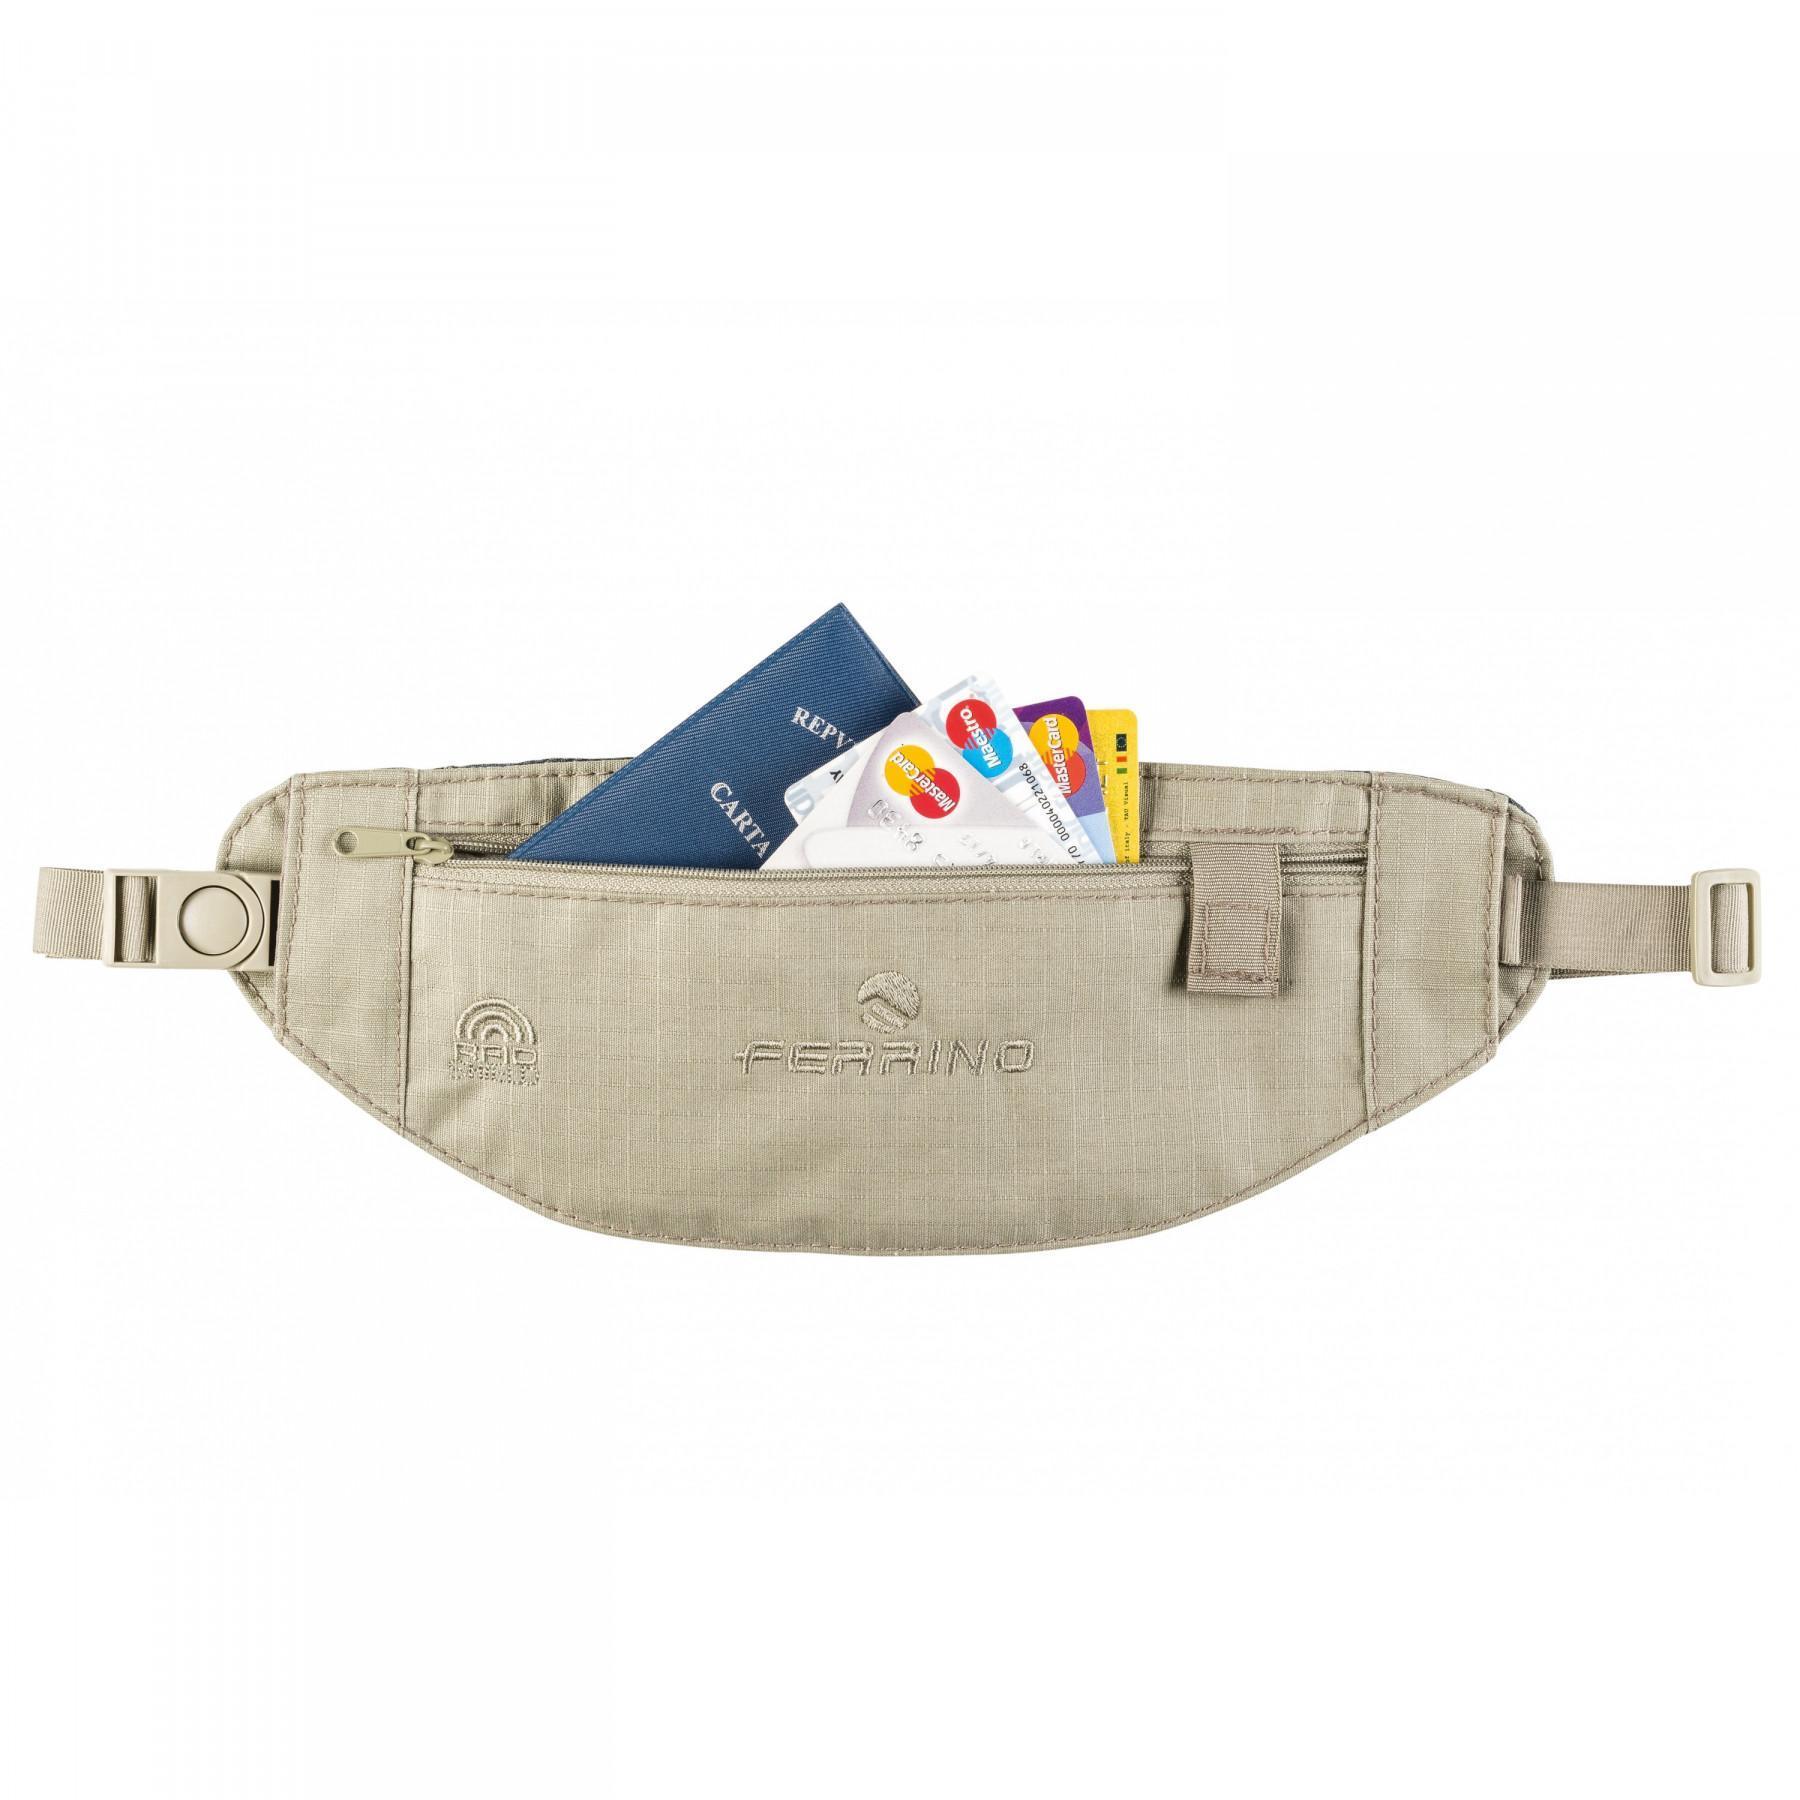 2-komorowy plecak typu fanny pack Ferrino